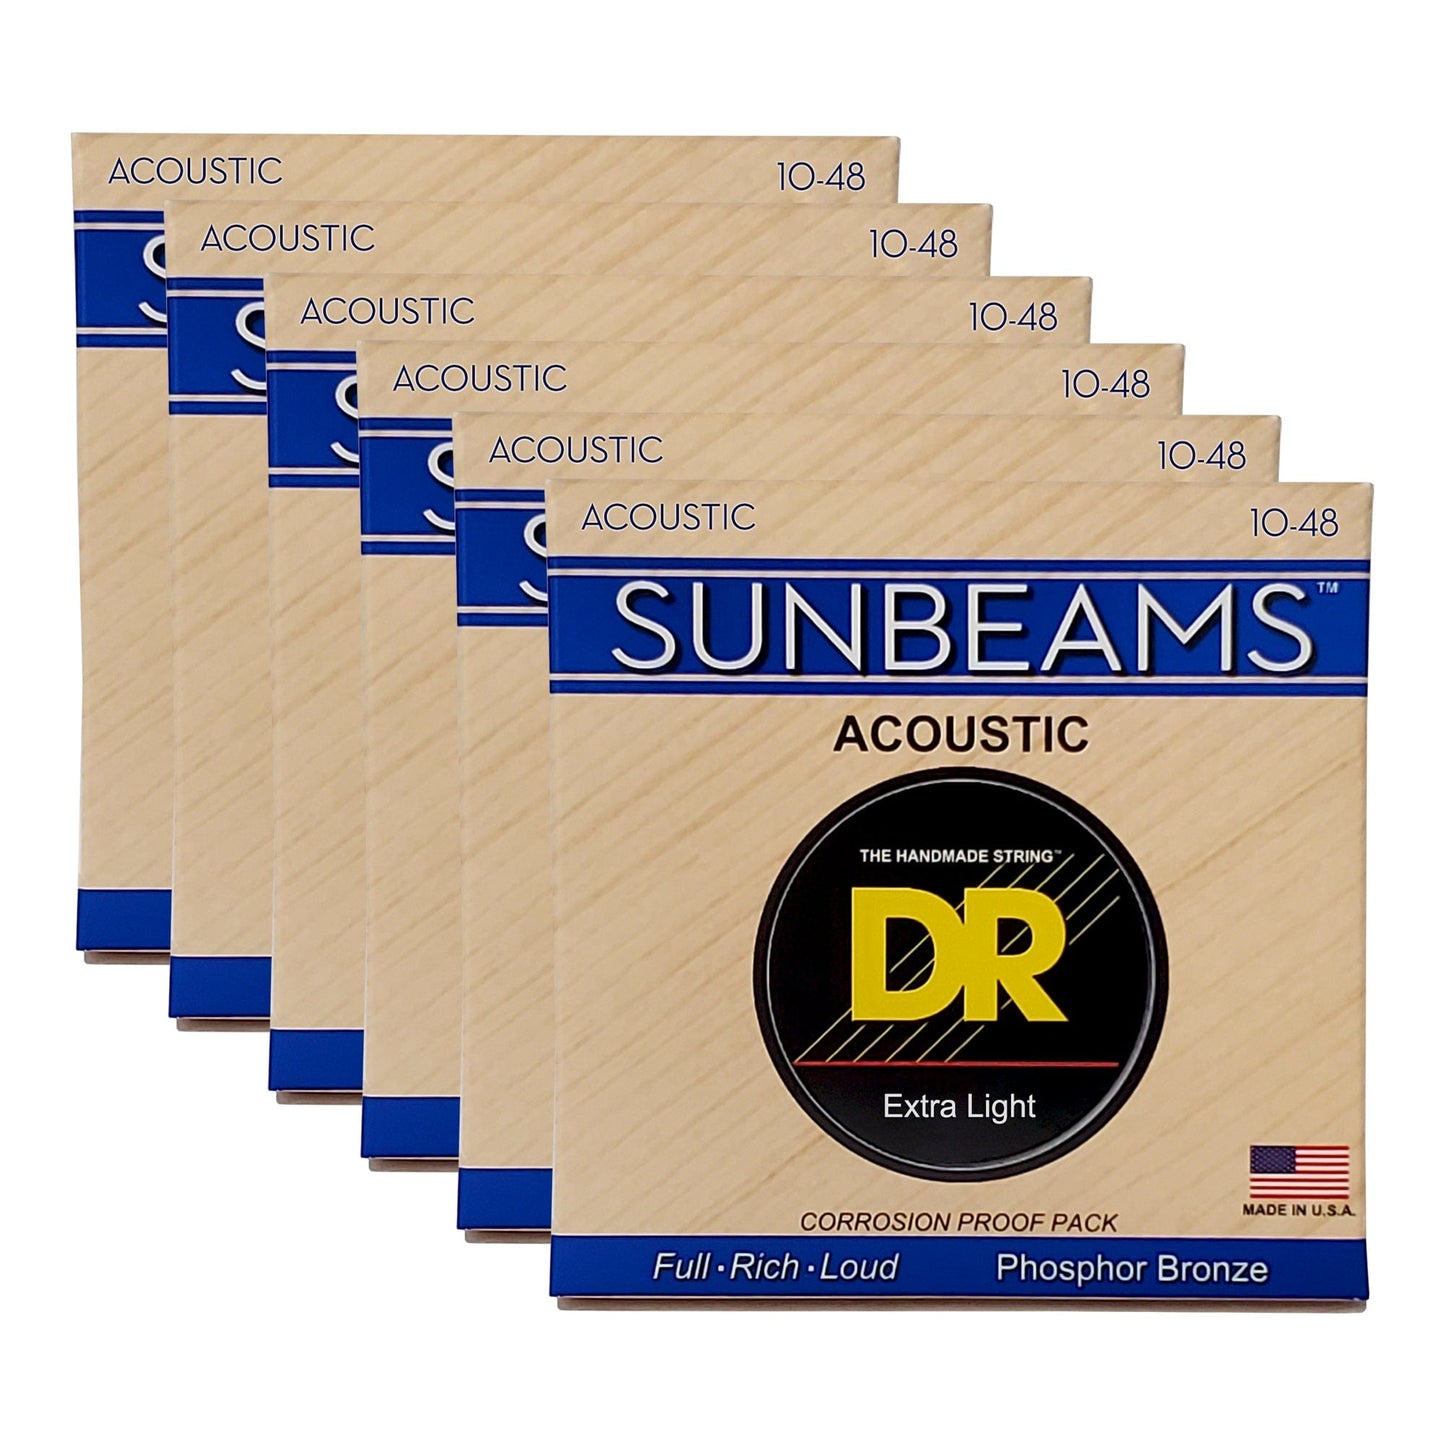 DR Strings Sunbeam Acoustic Extra Light 10-48 6 Pack Bundle Accessories / Strings / Guitar Strings